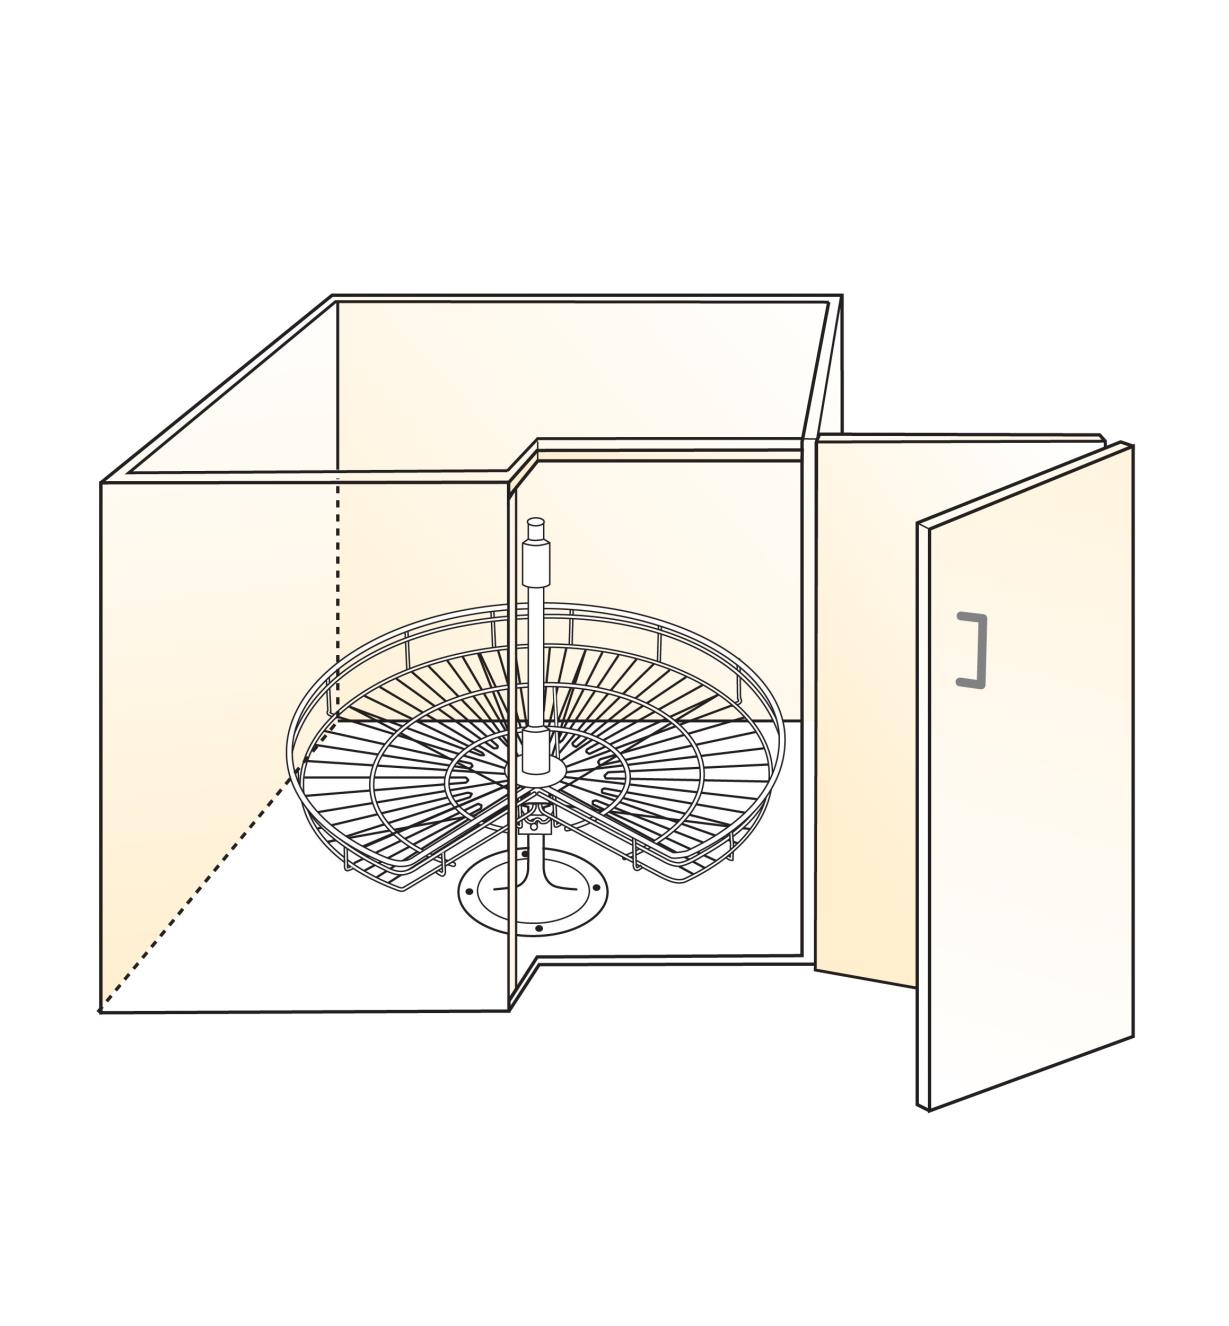 Illustration of 270° post-mount shelf installed in cabinet